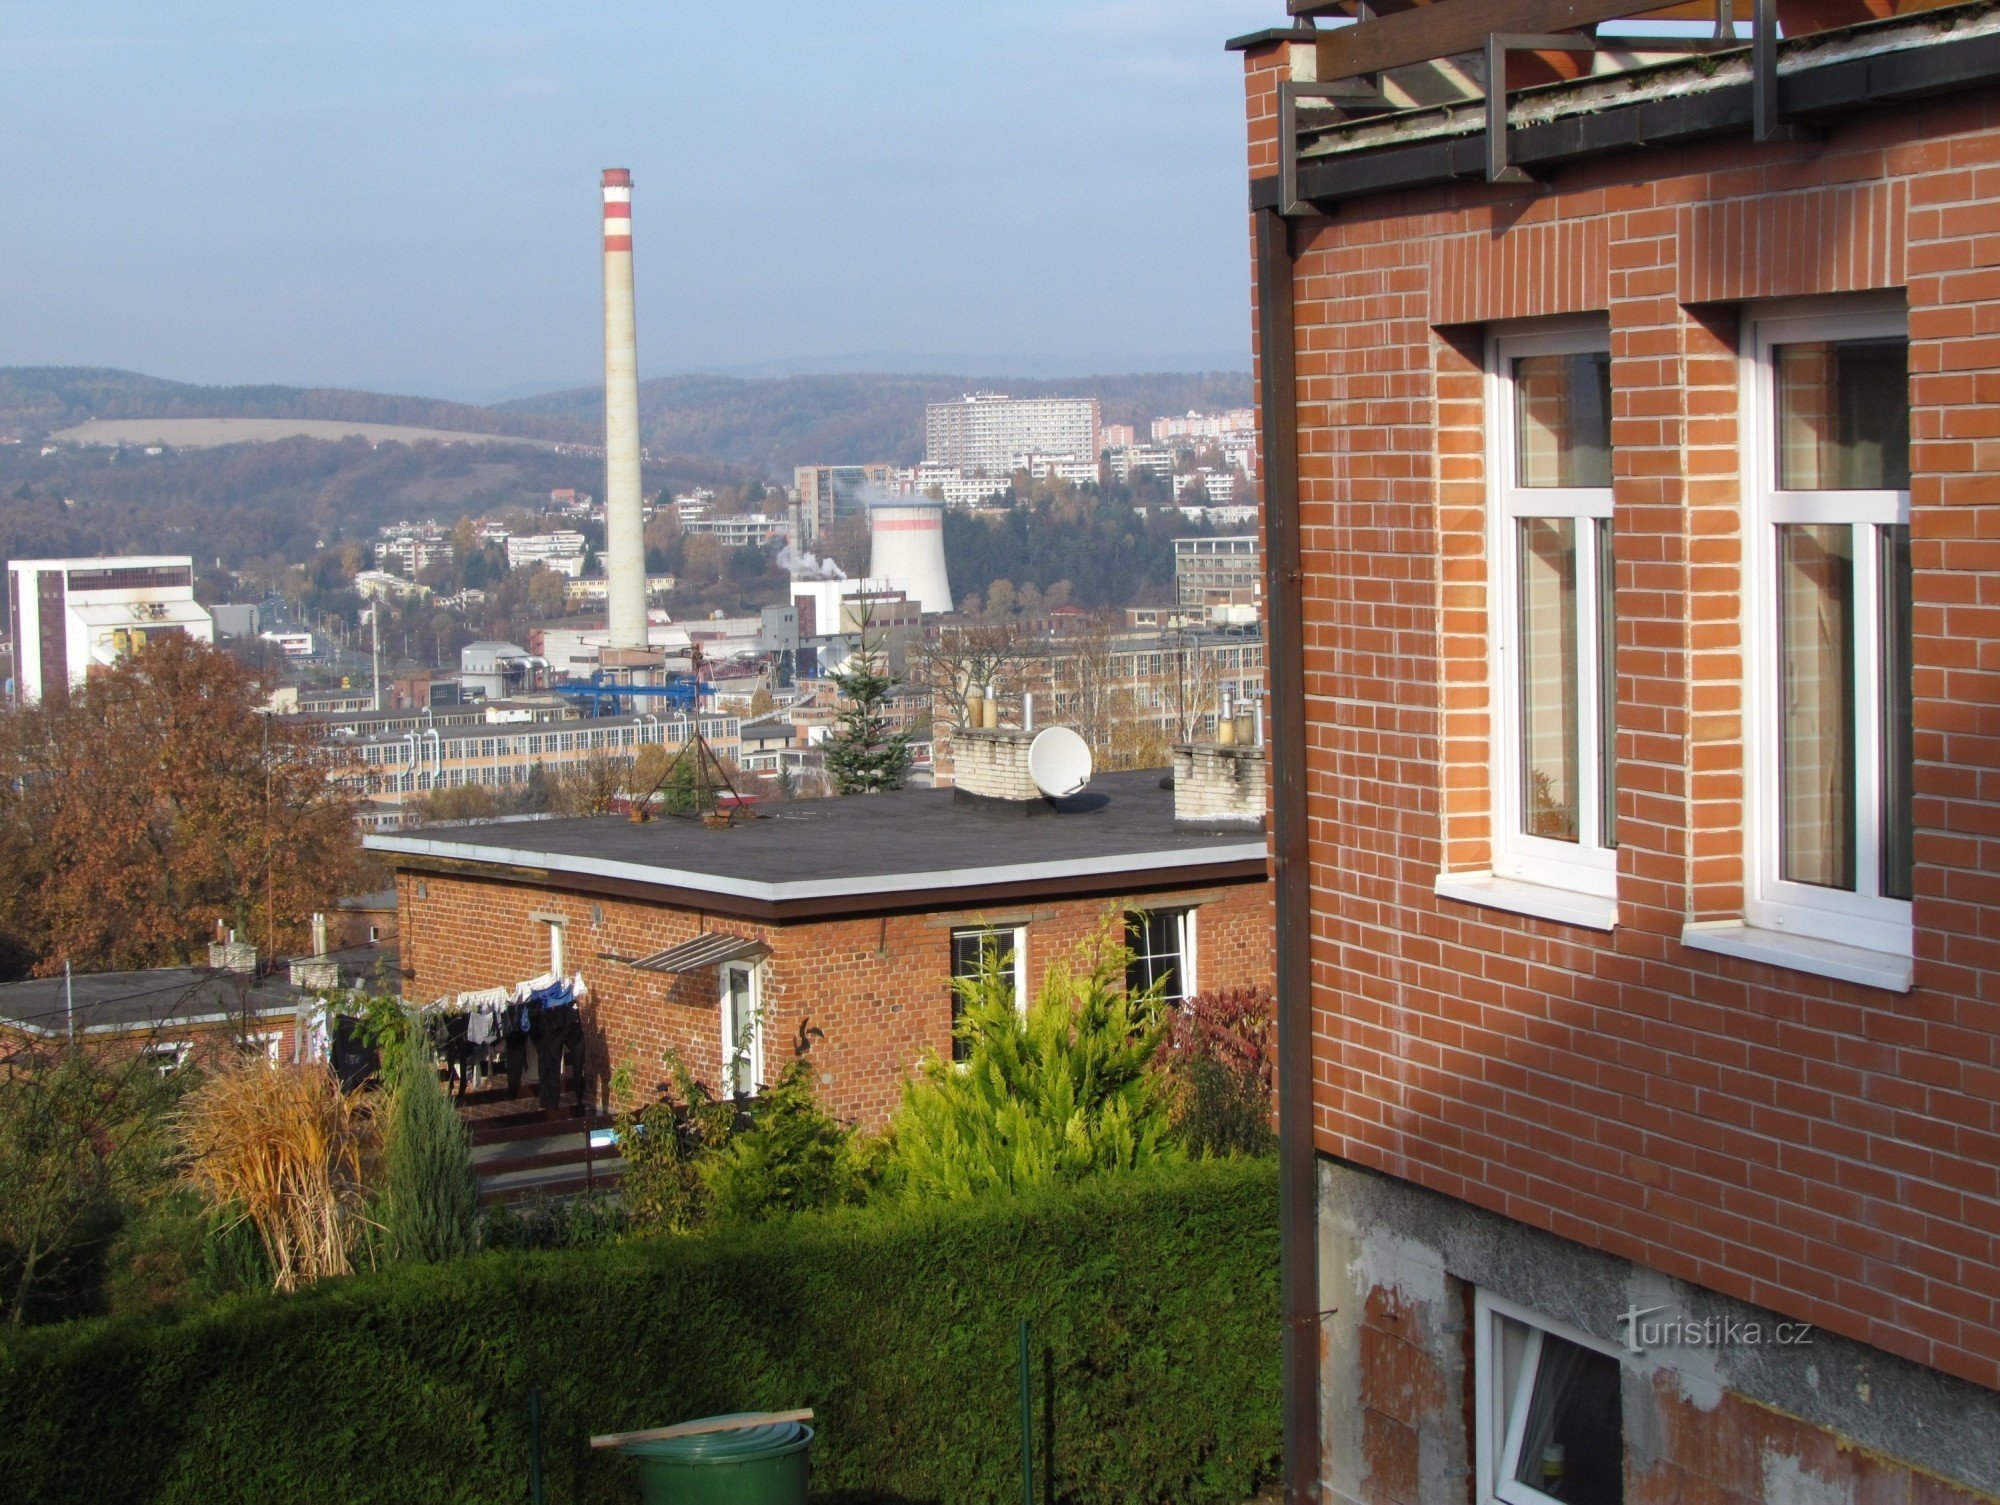 Letná - houses and views